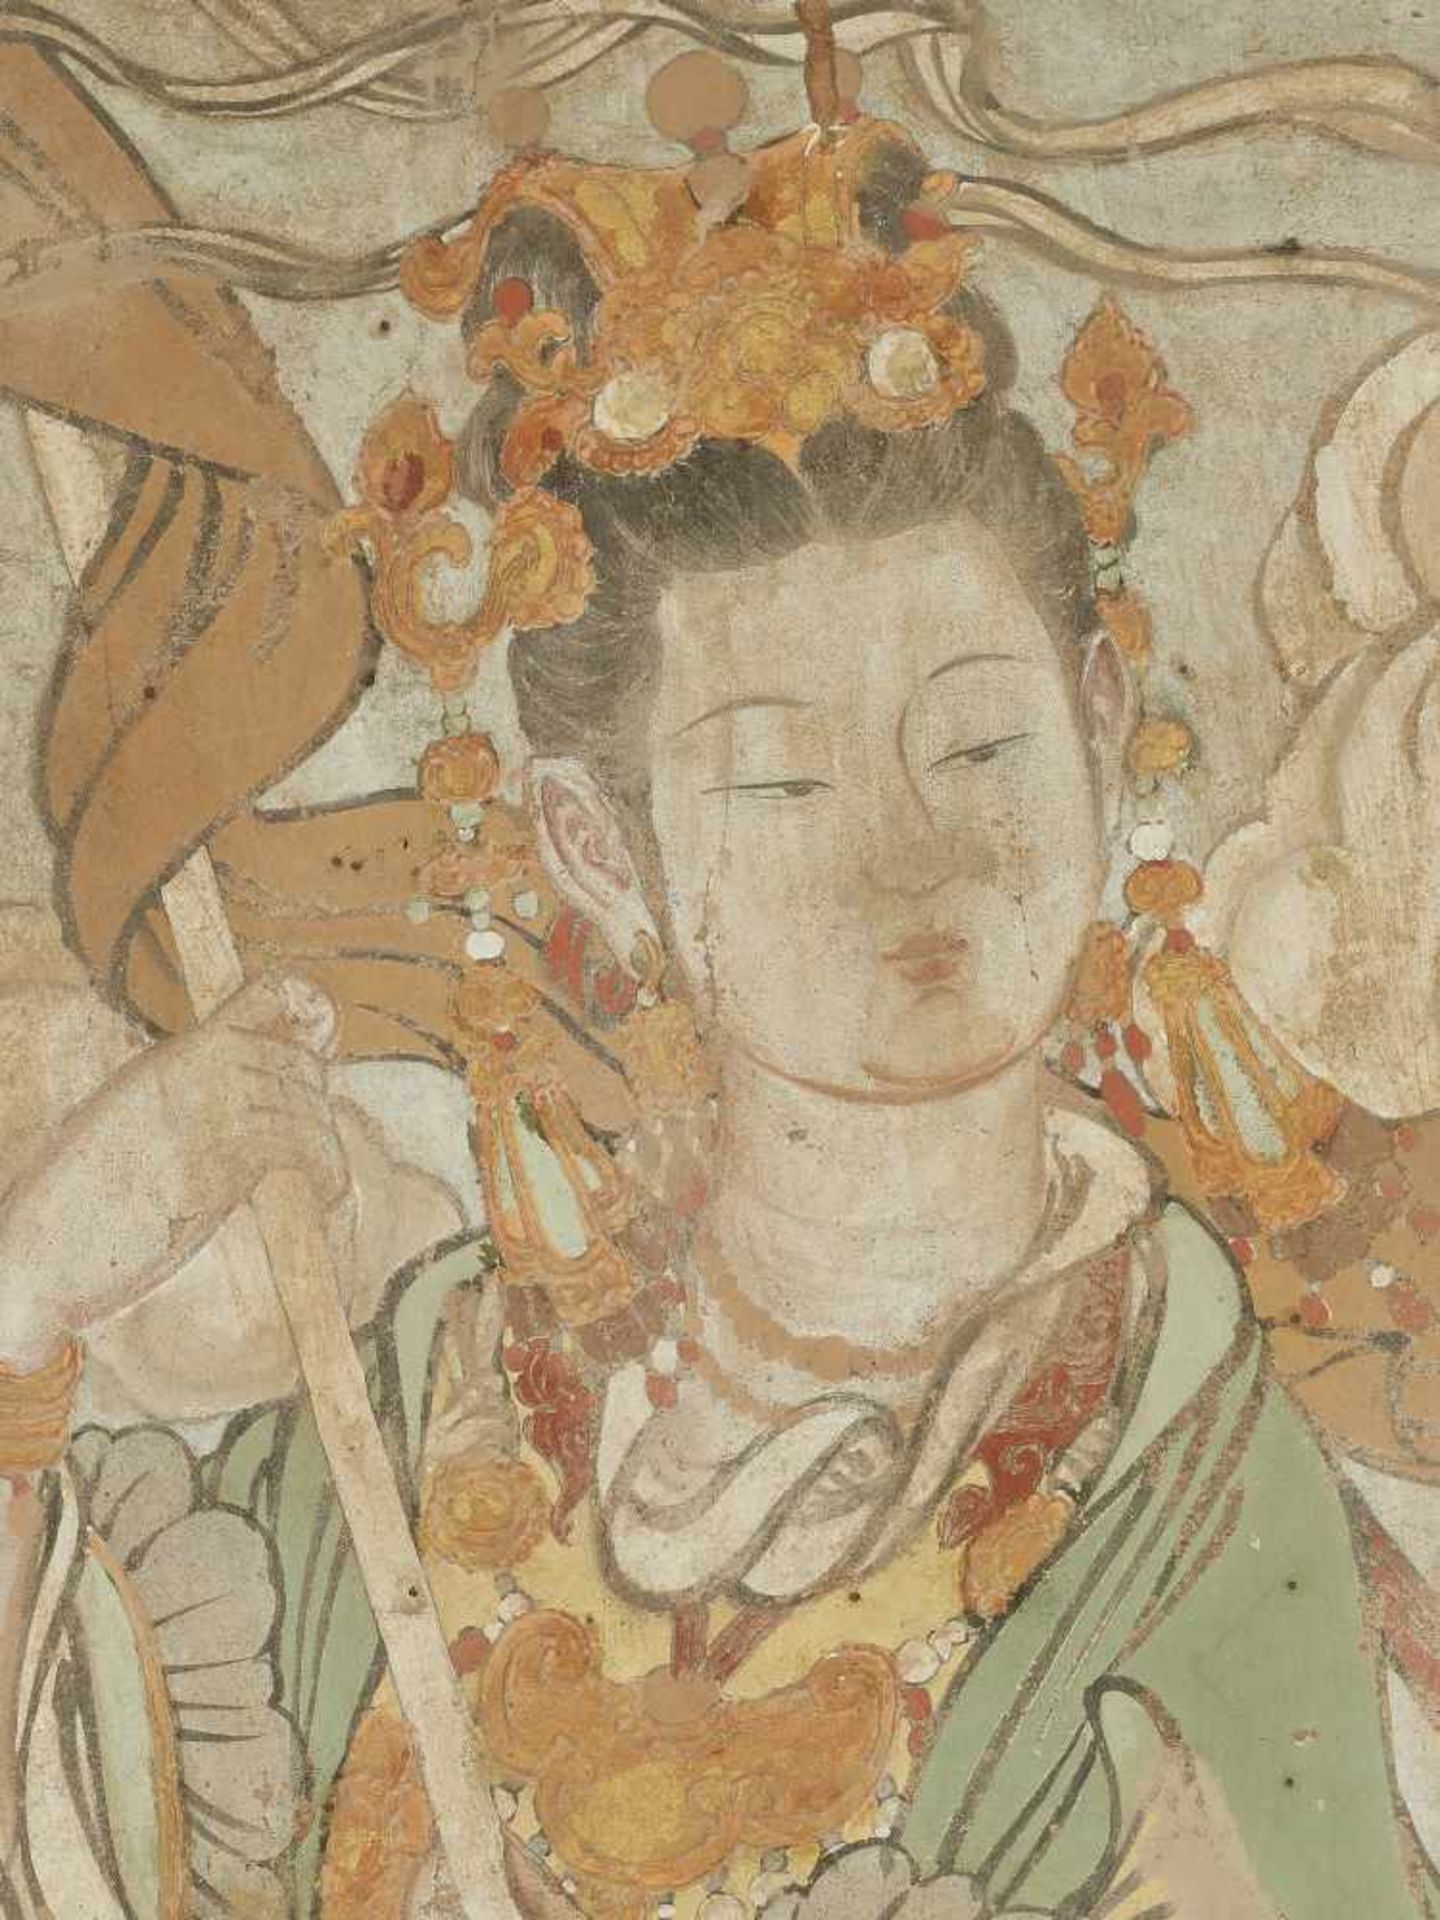 A STUCCO FRESCO, YUAN-MINGChina, 13th-16th century. Polychrome fresco painting with a celestial